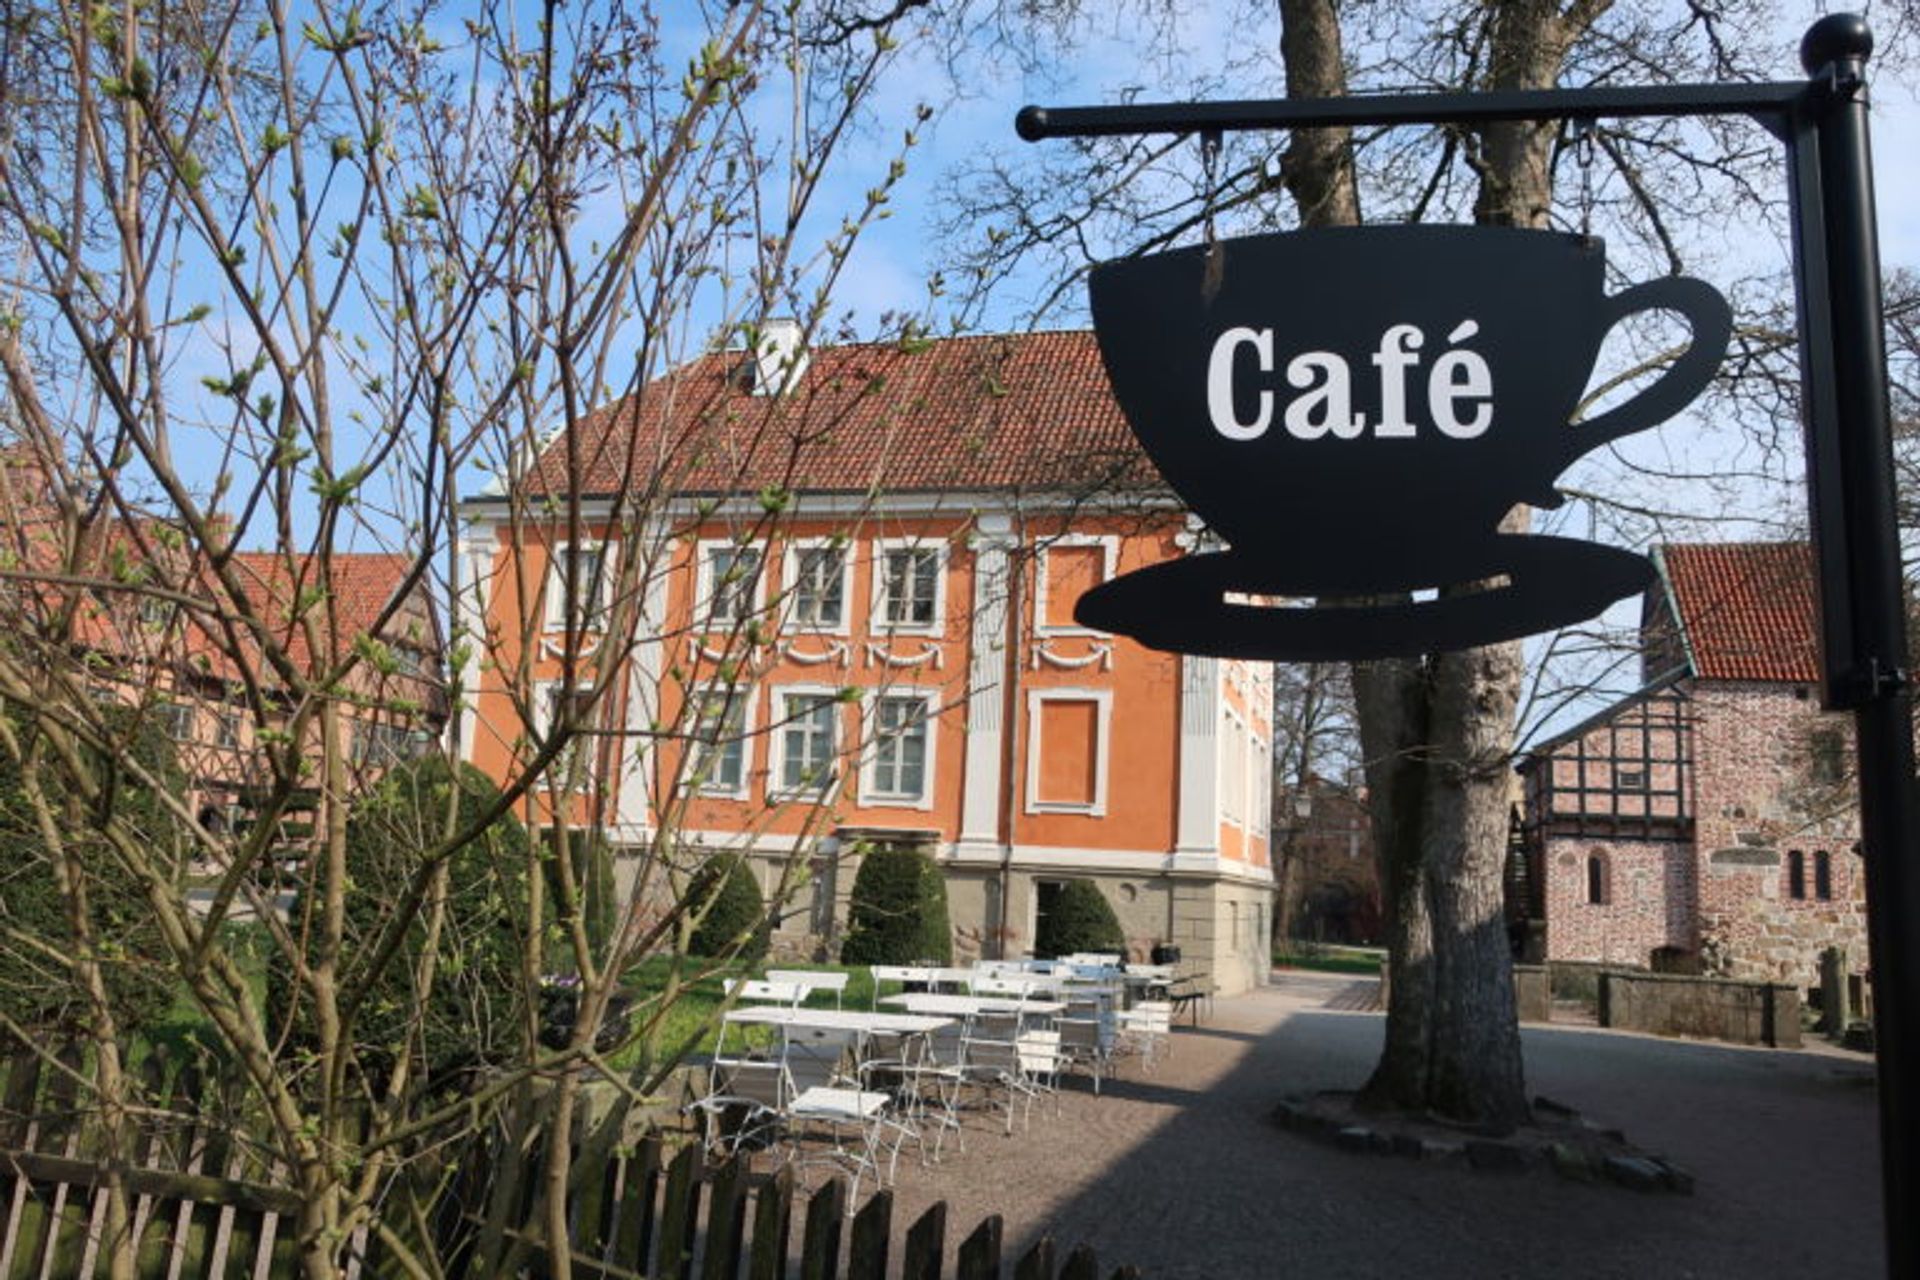 A close-up of a cafe sign.